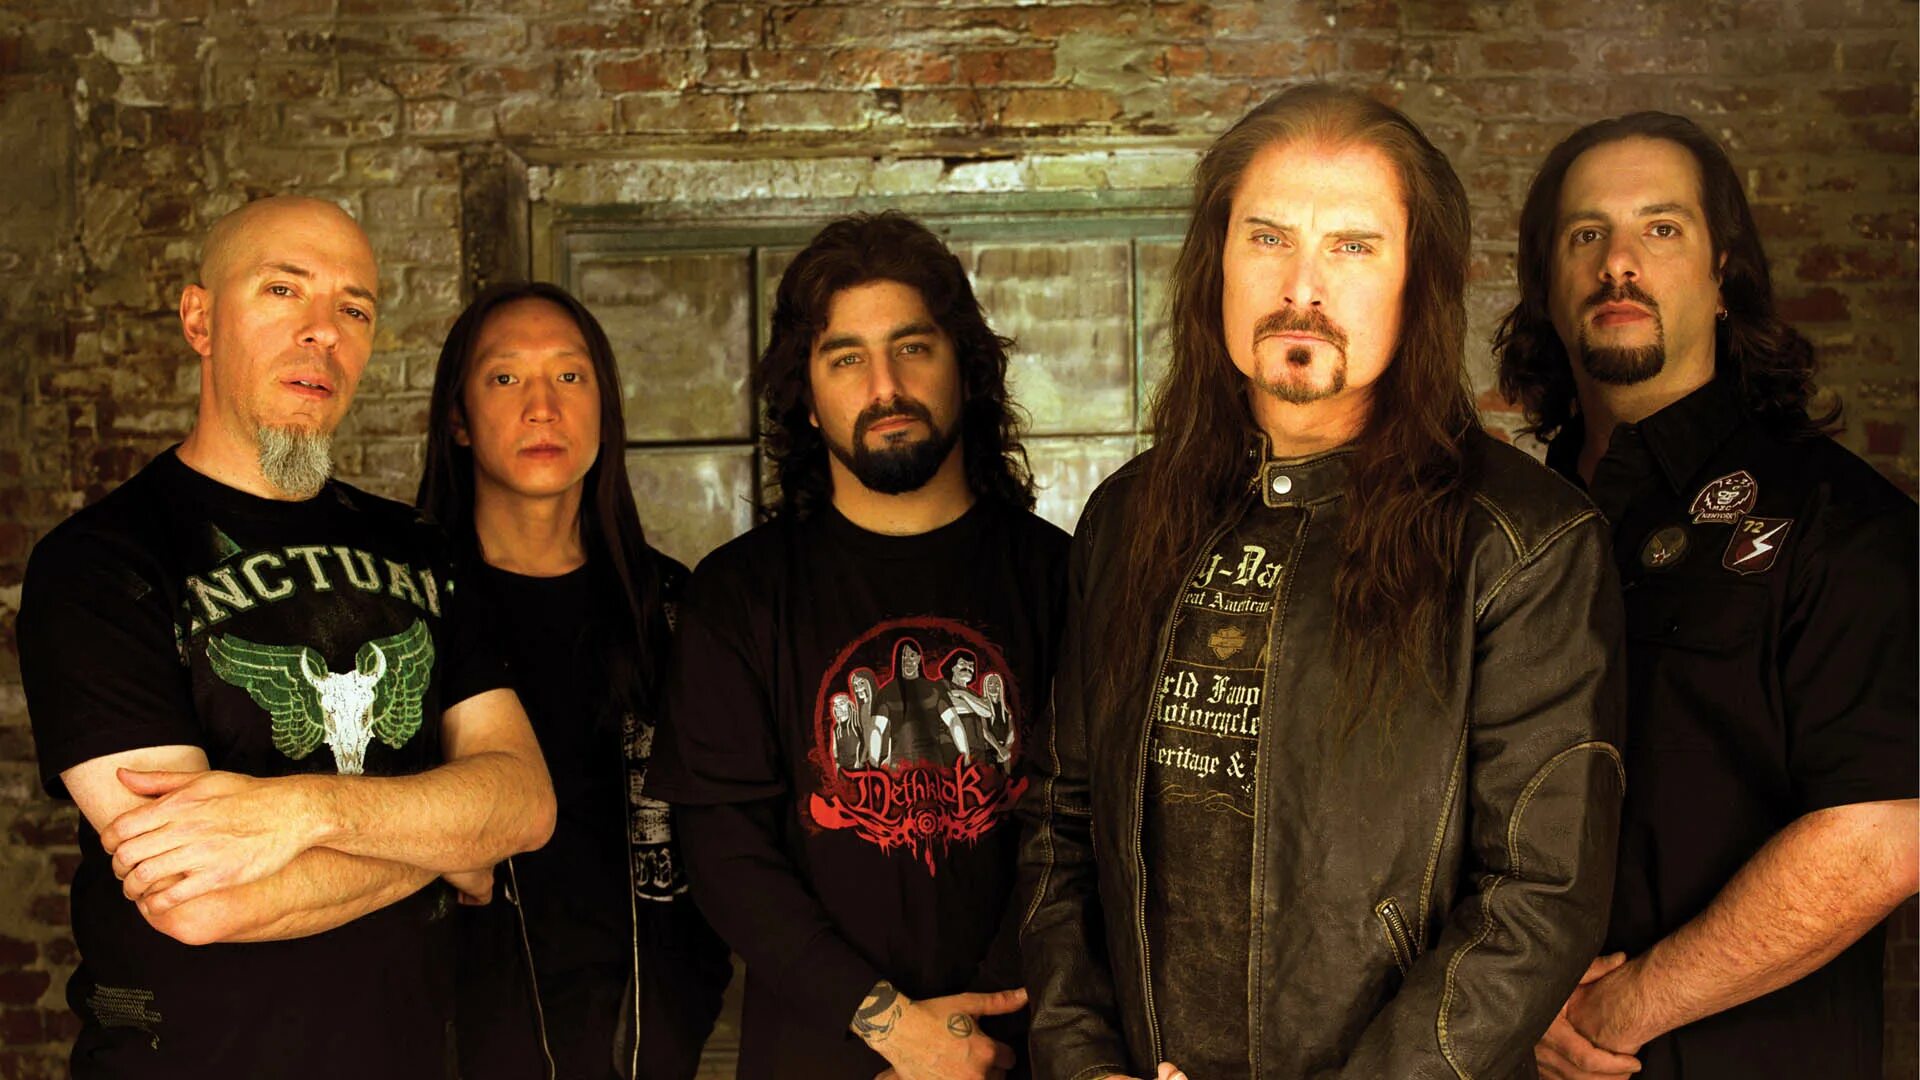 Группа Dream Theater. Dream Theater фото группы. Группа Dream Theater 2007. Dream Theater 2021. Группа мечта песни